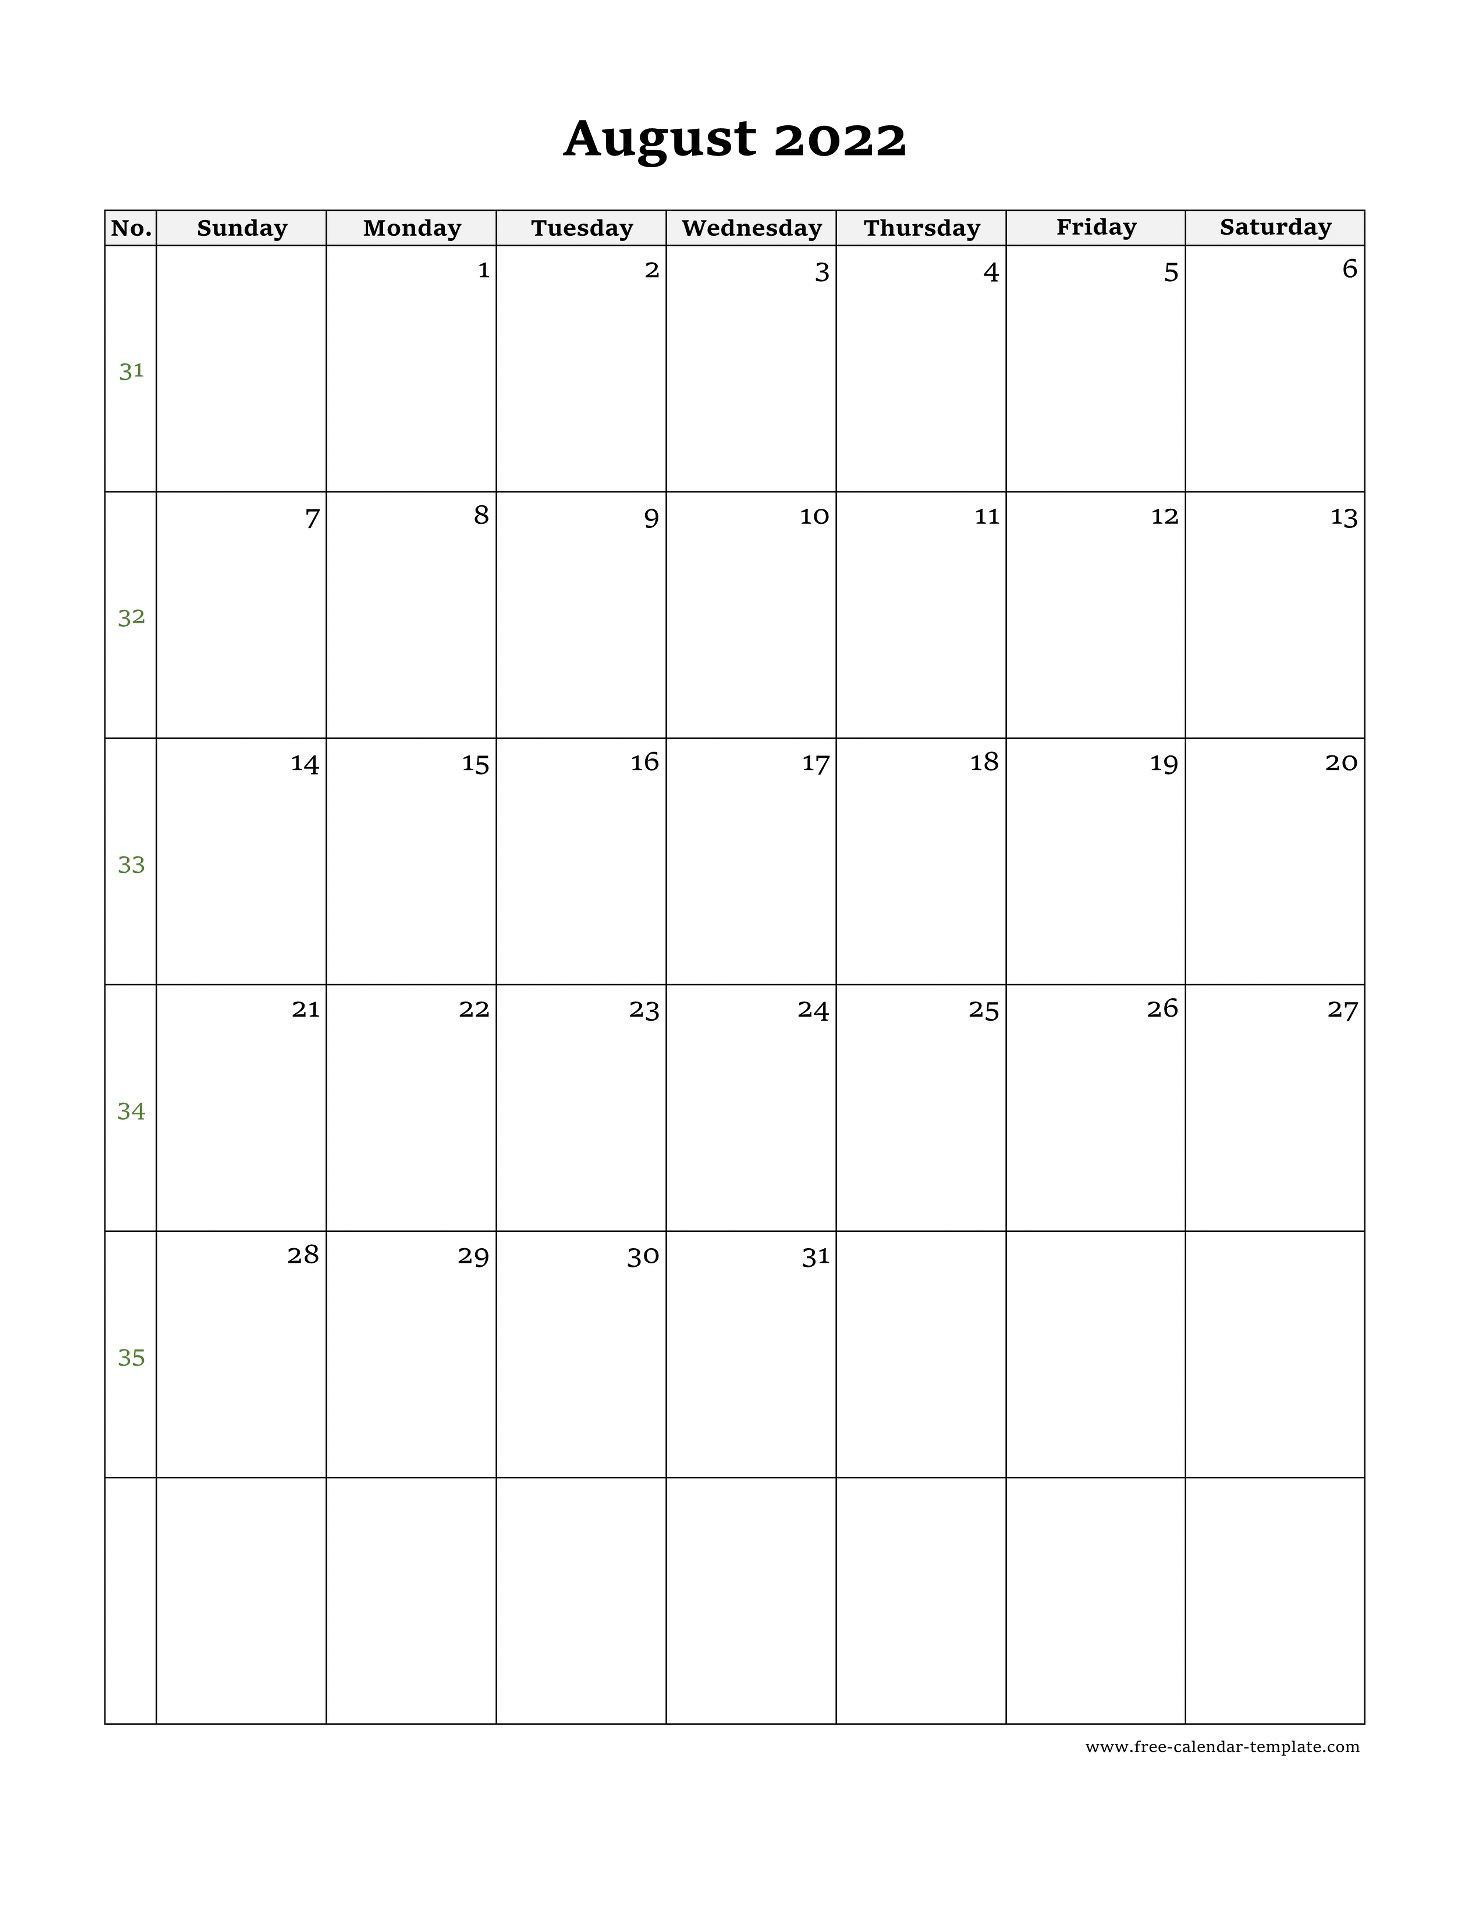 August 2022 Free Calendar Tempplate | Free-Calendar  August 2022 To August 2022 Calendar Printable